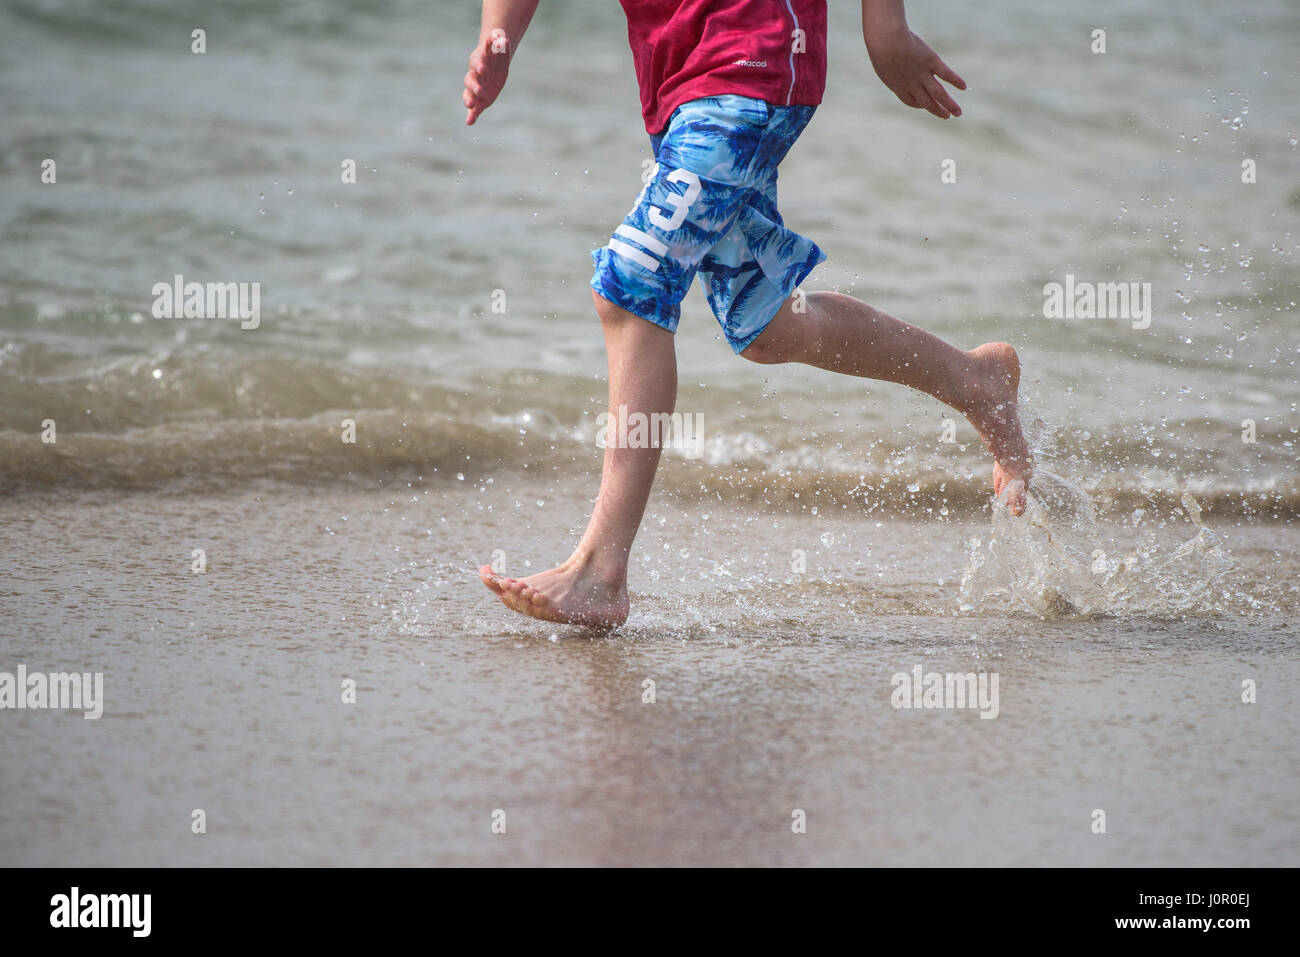 Fistral Newquay Person running along shoreline Splash Splashing Runner Spray Water Barefoot Energy Energetic Seaside Tourism Beach Holiday Stock Photo